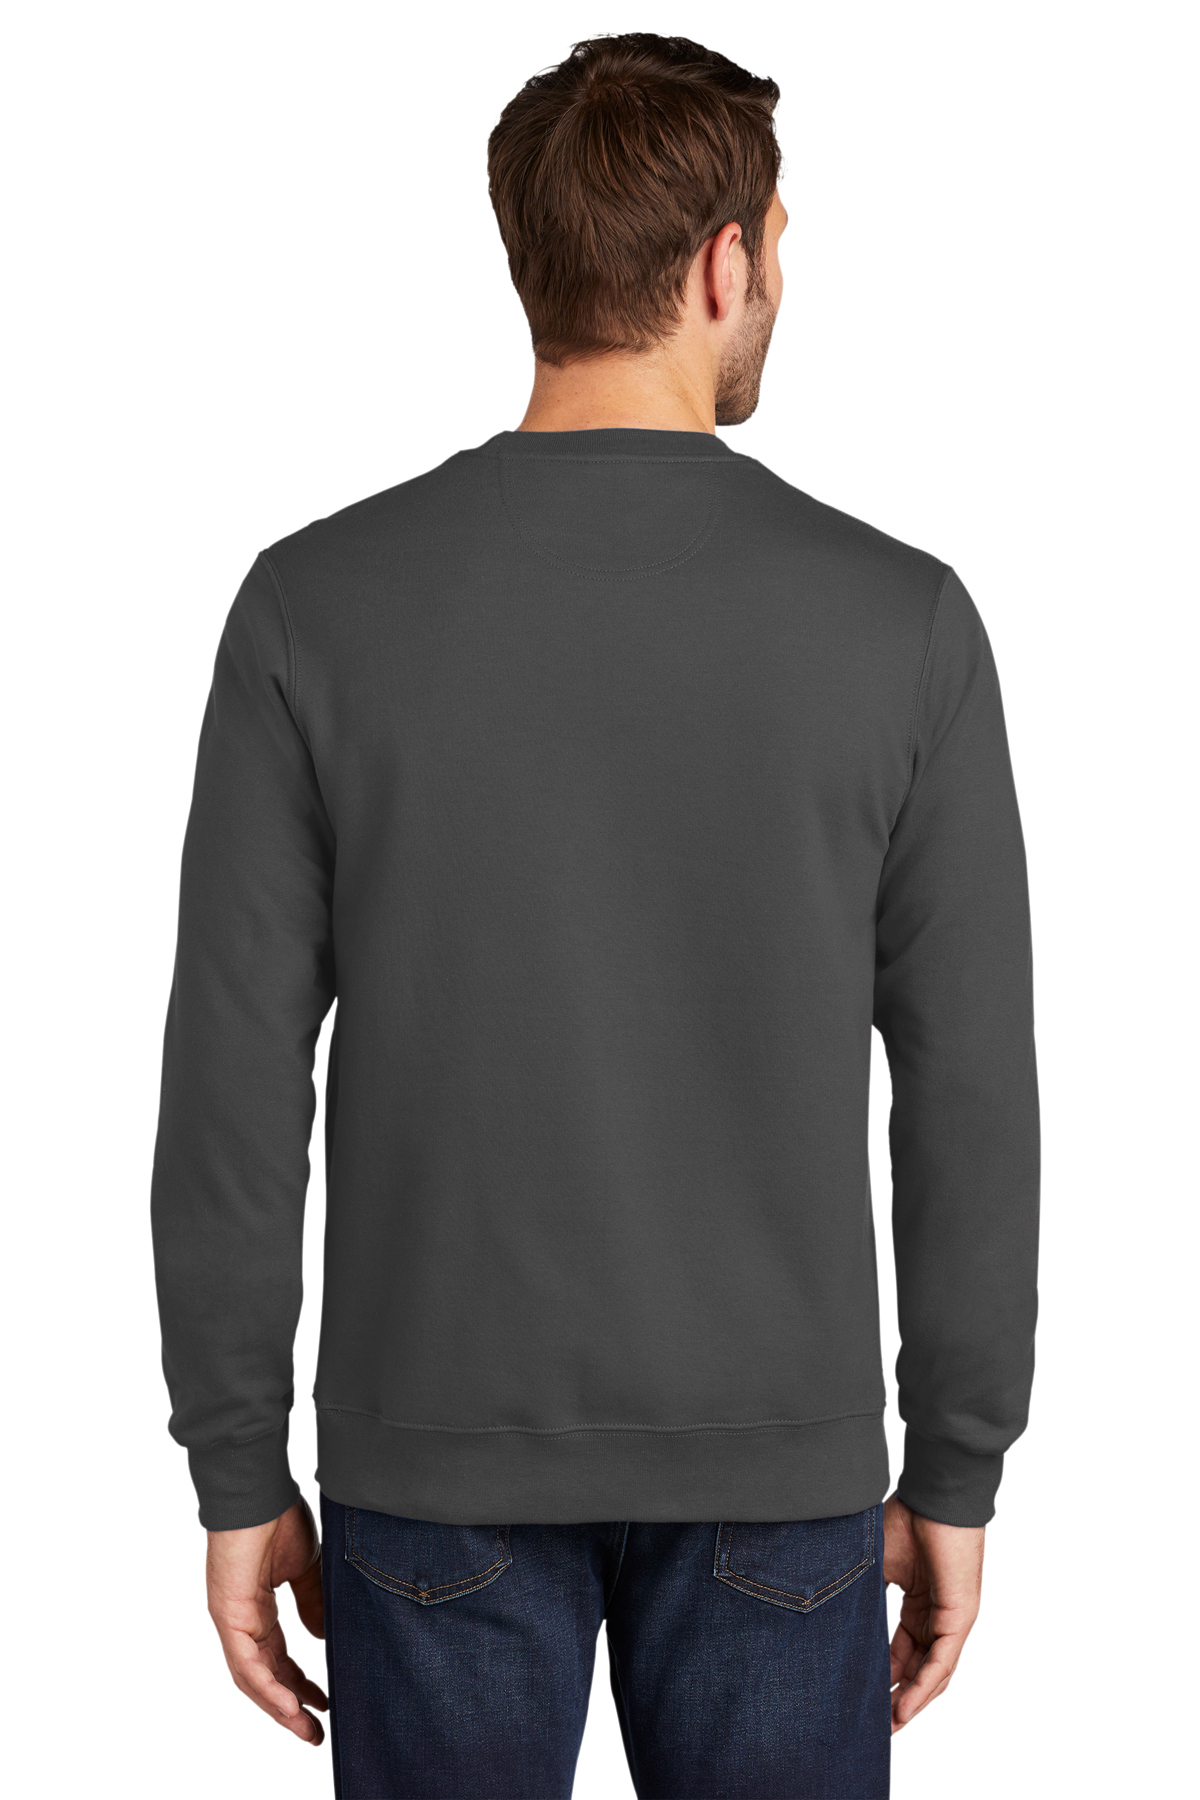 Port & Company ® Fan Favorite™ Fleece Crewneck Sweatshirt | Product ...